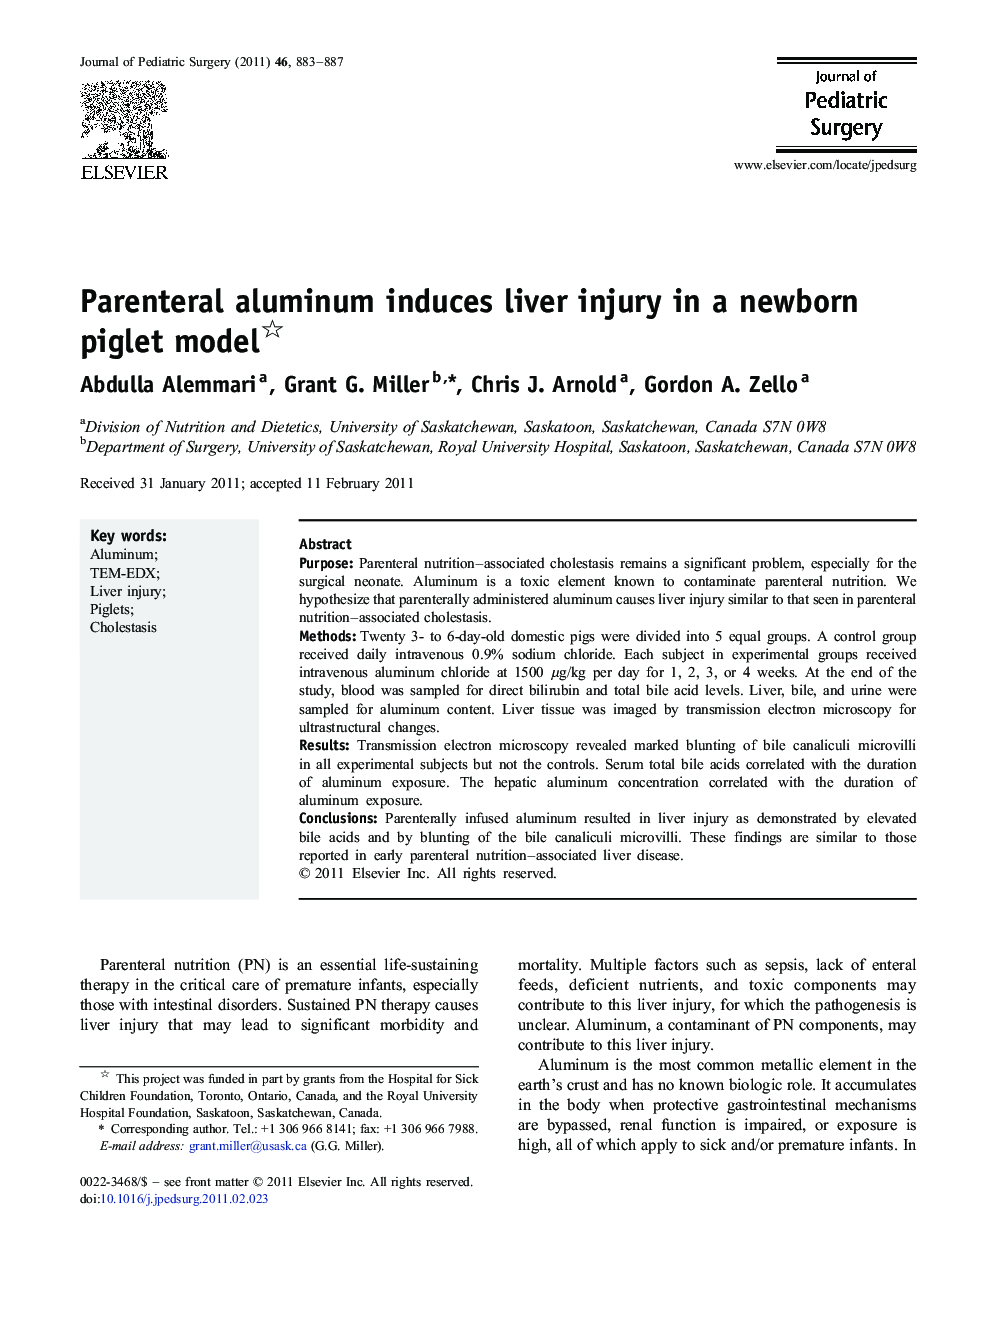 Parenteral aluminum induces liver injury in a newborn piglet model